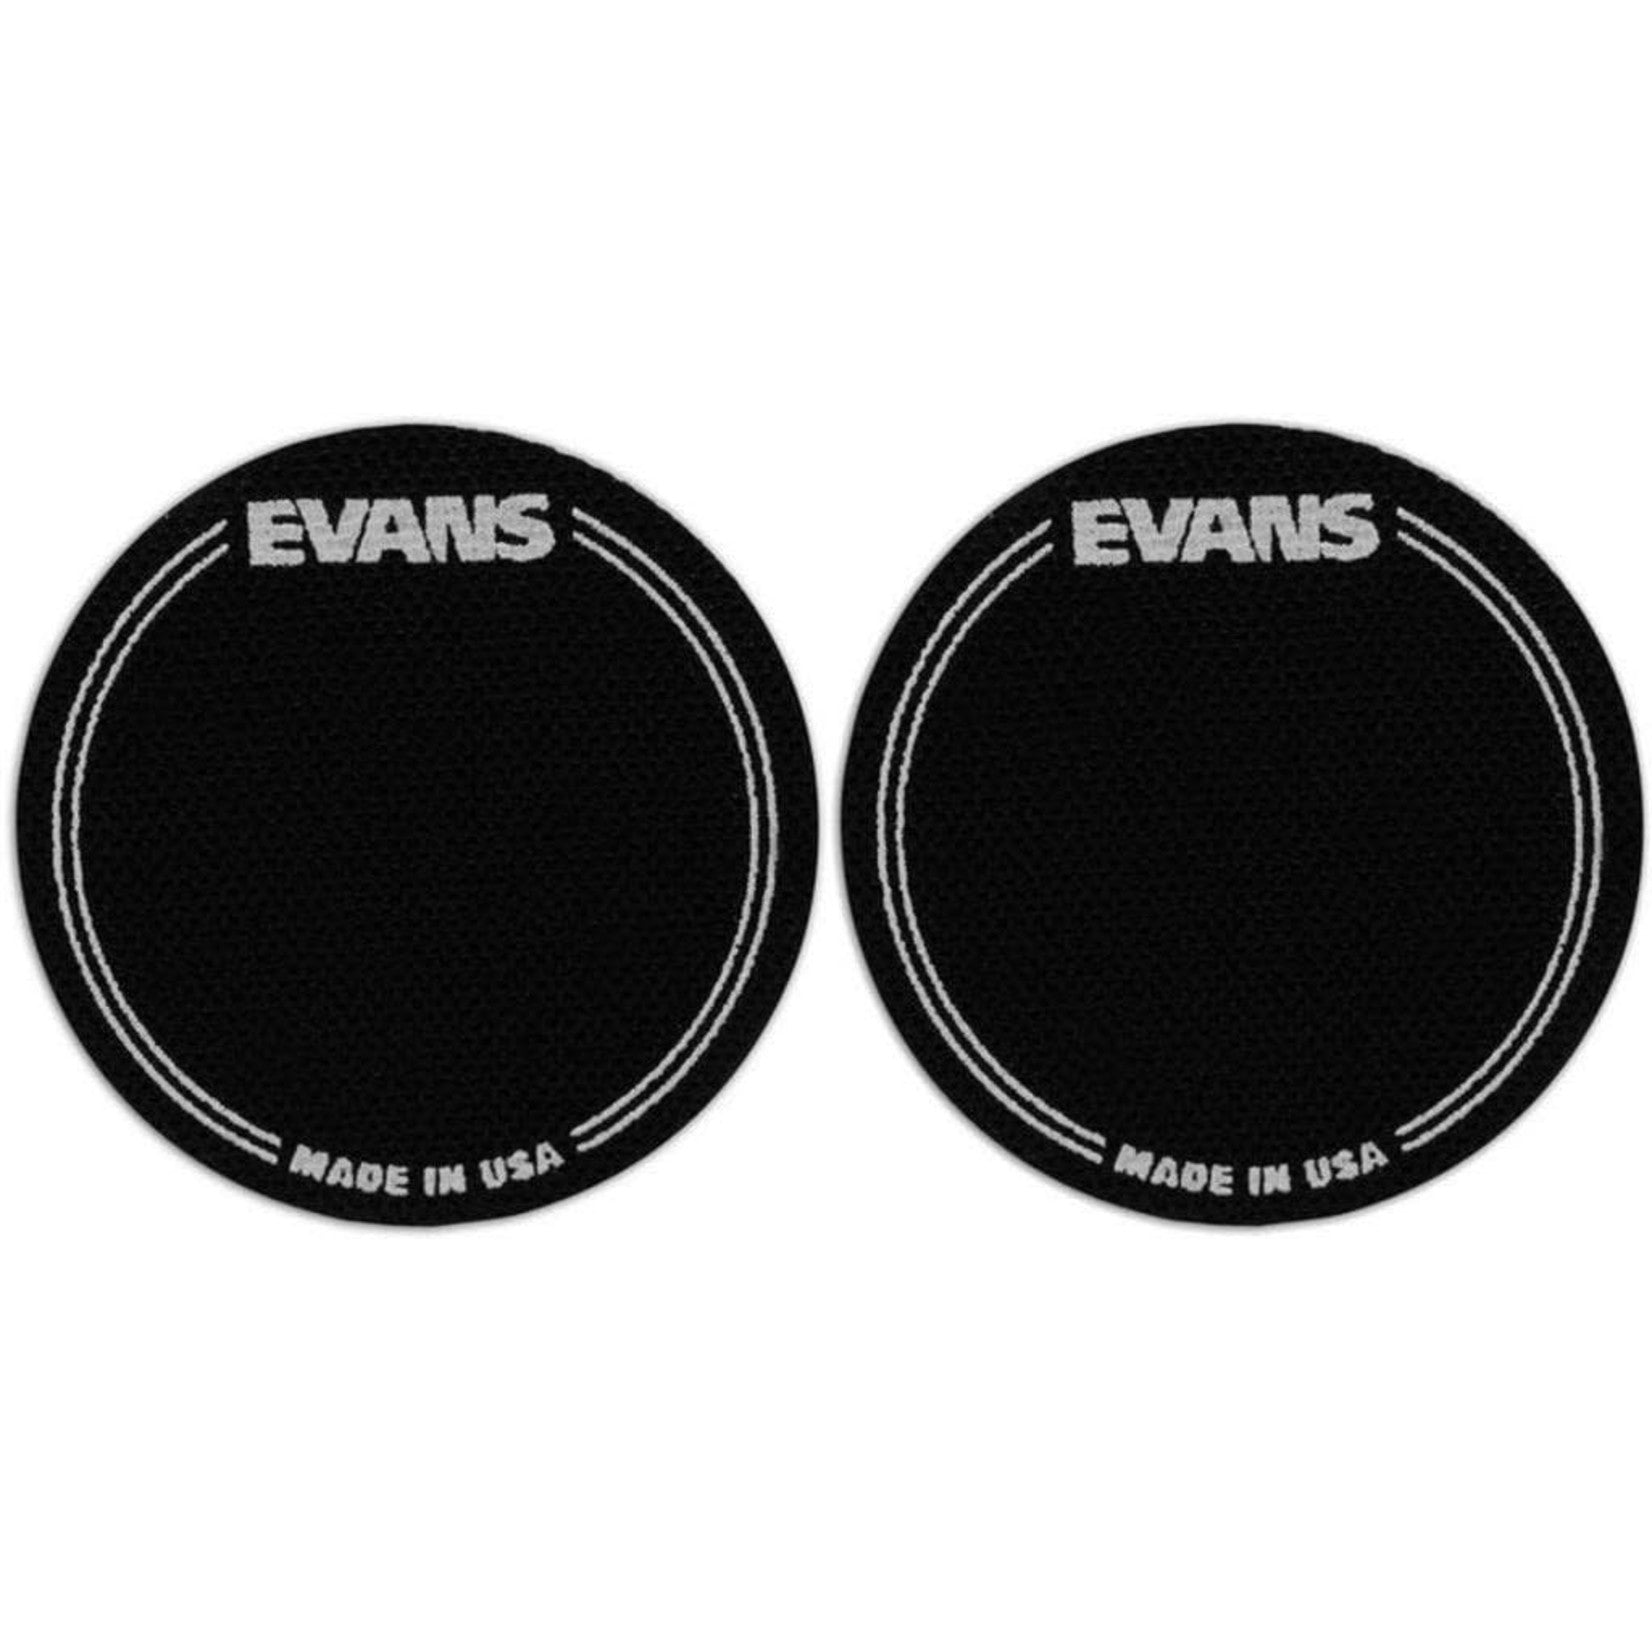 Evans Single Bass Drum Patch - Black (2 pack) (EQPB1)